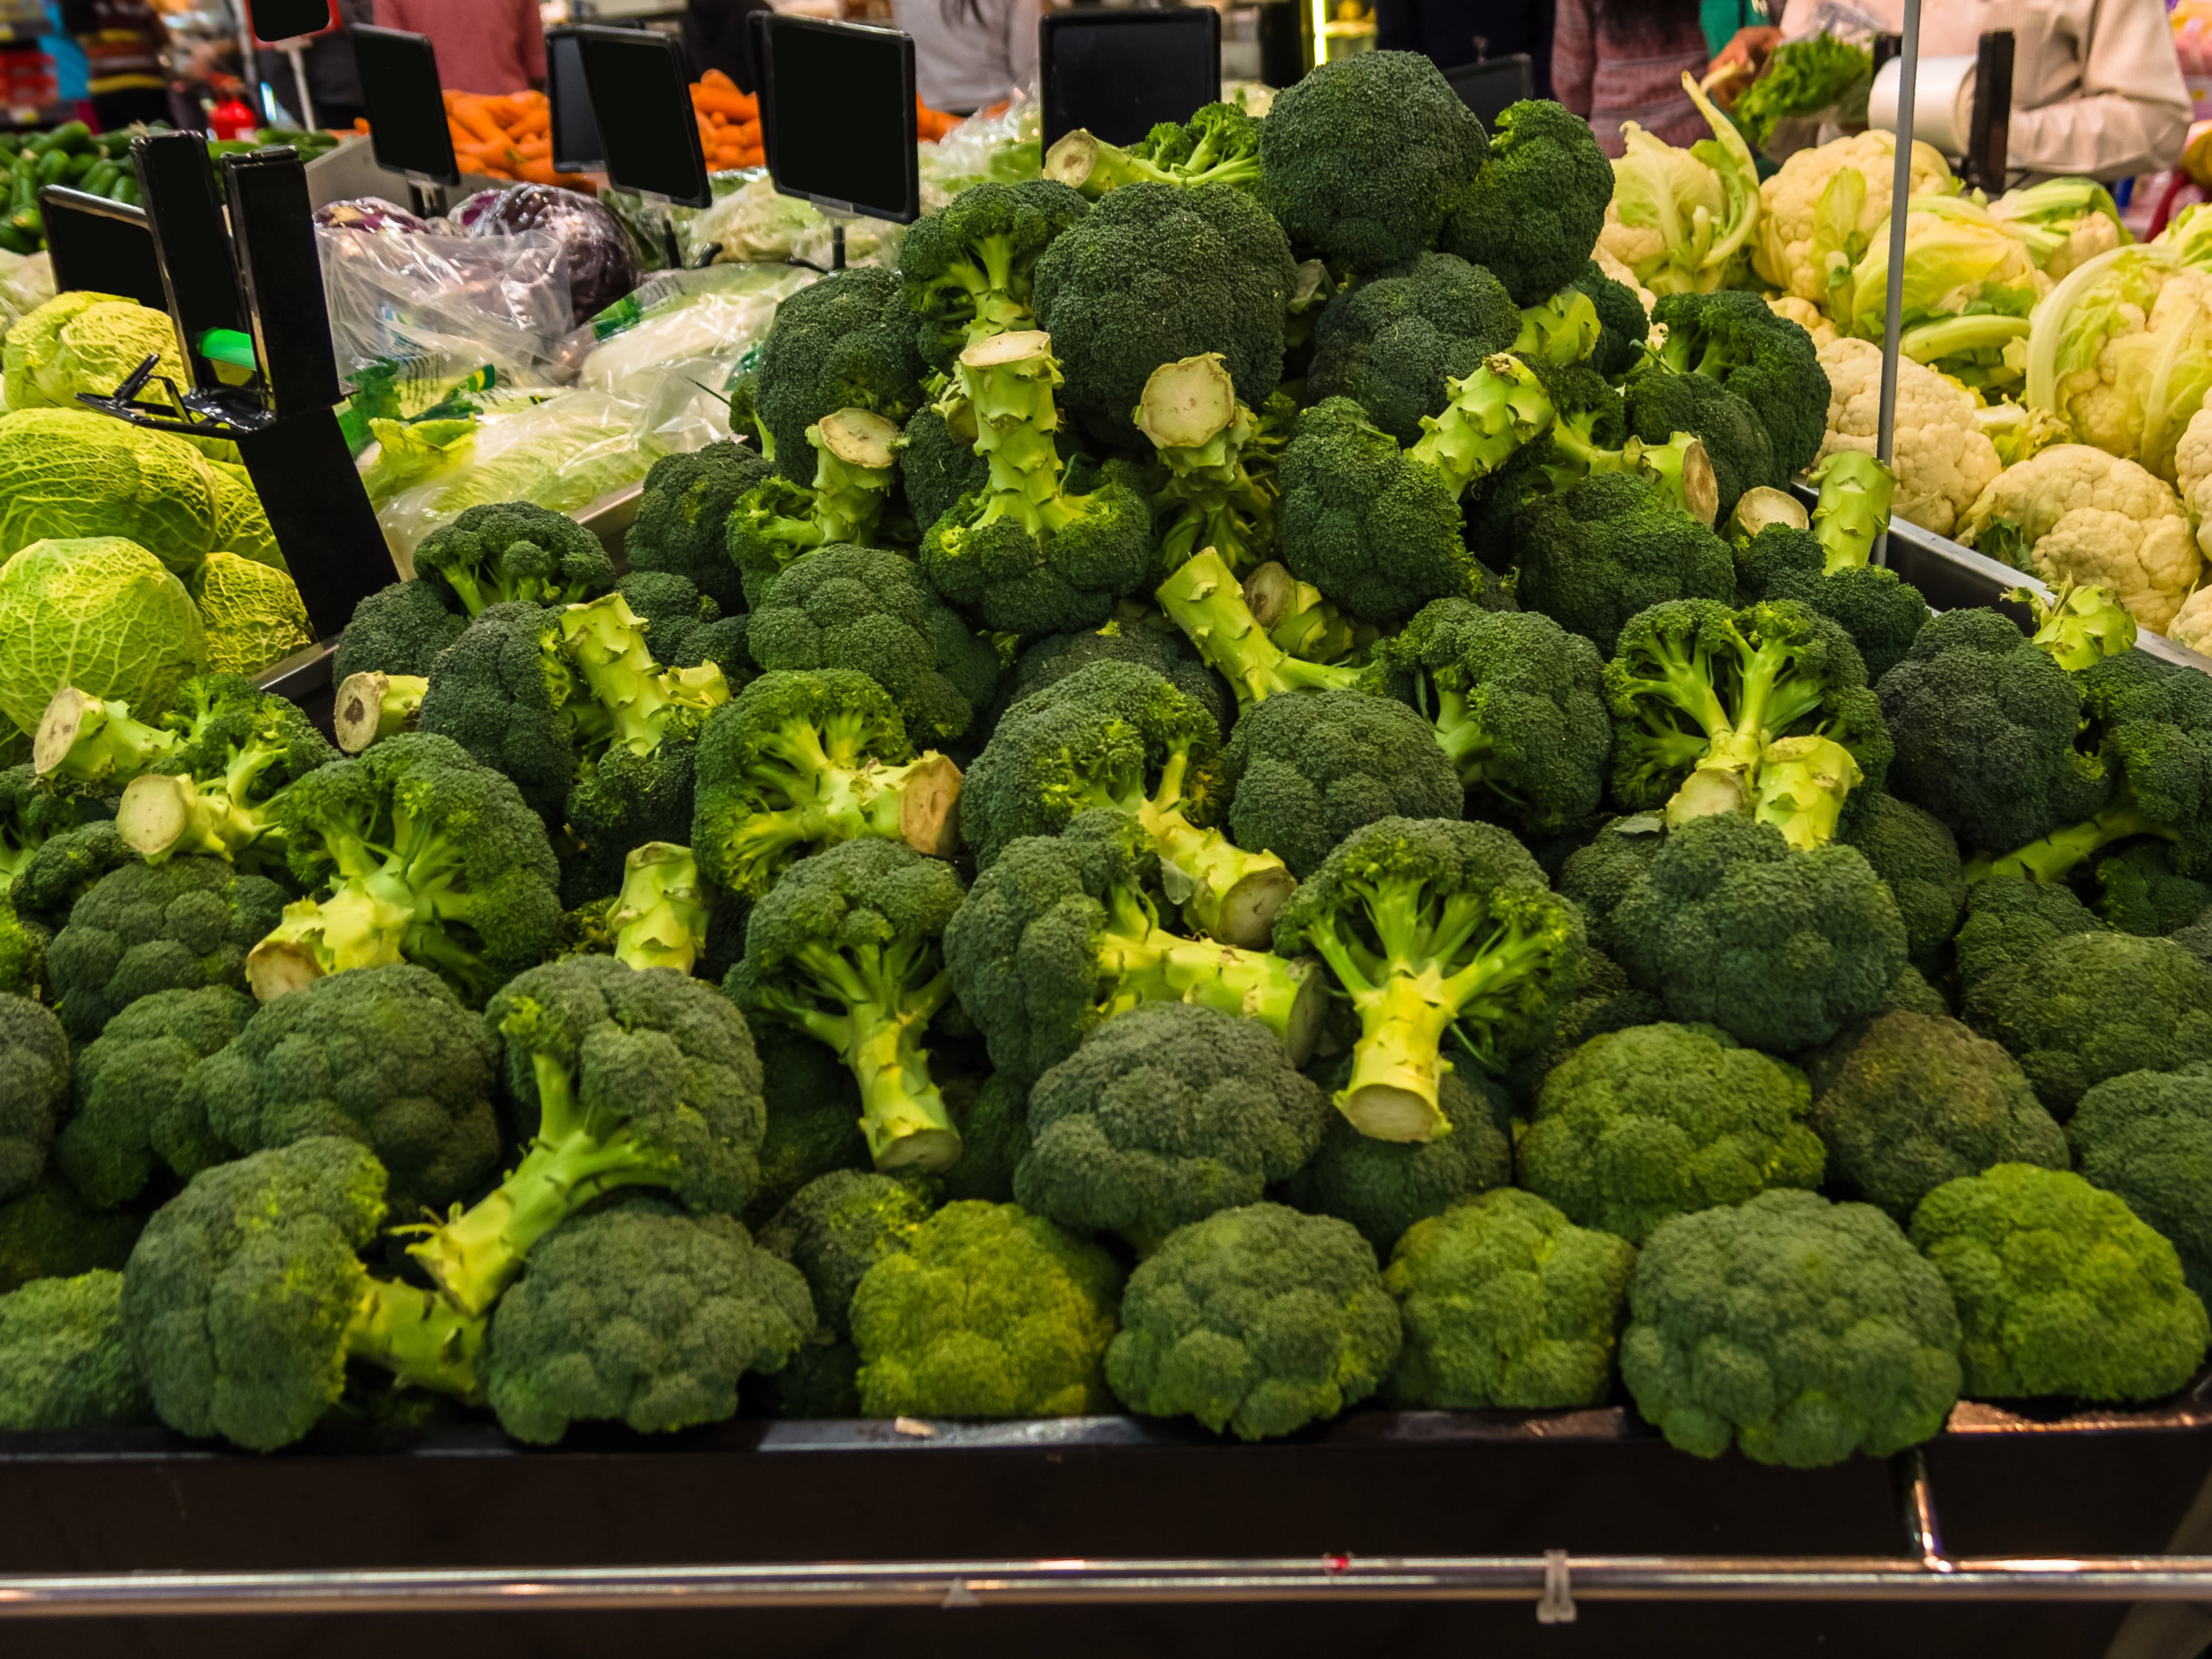 Broccoli costs AU$11.90 per kilogram in one popular supermarket